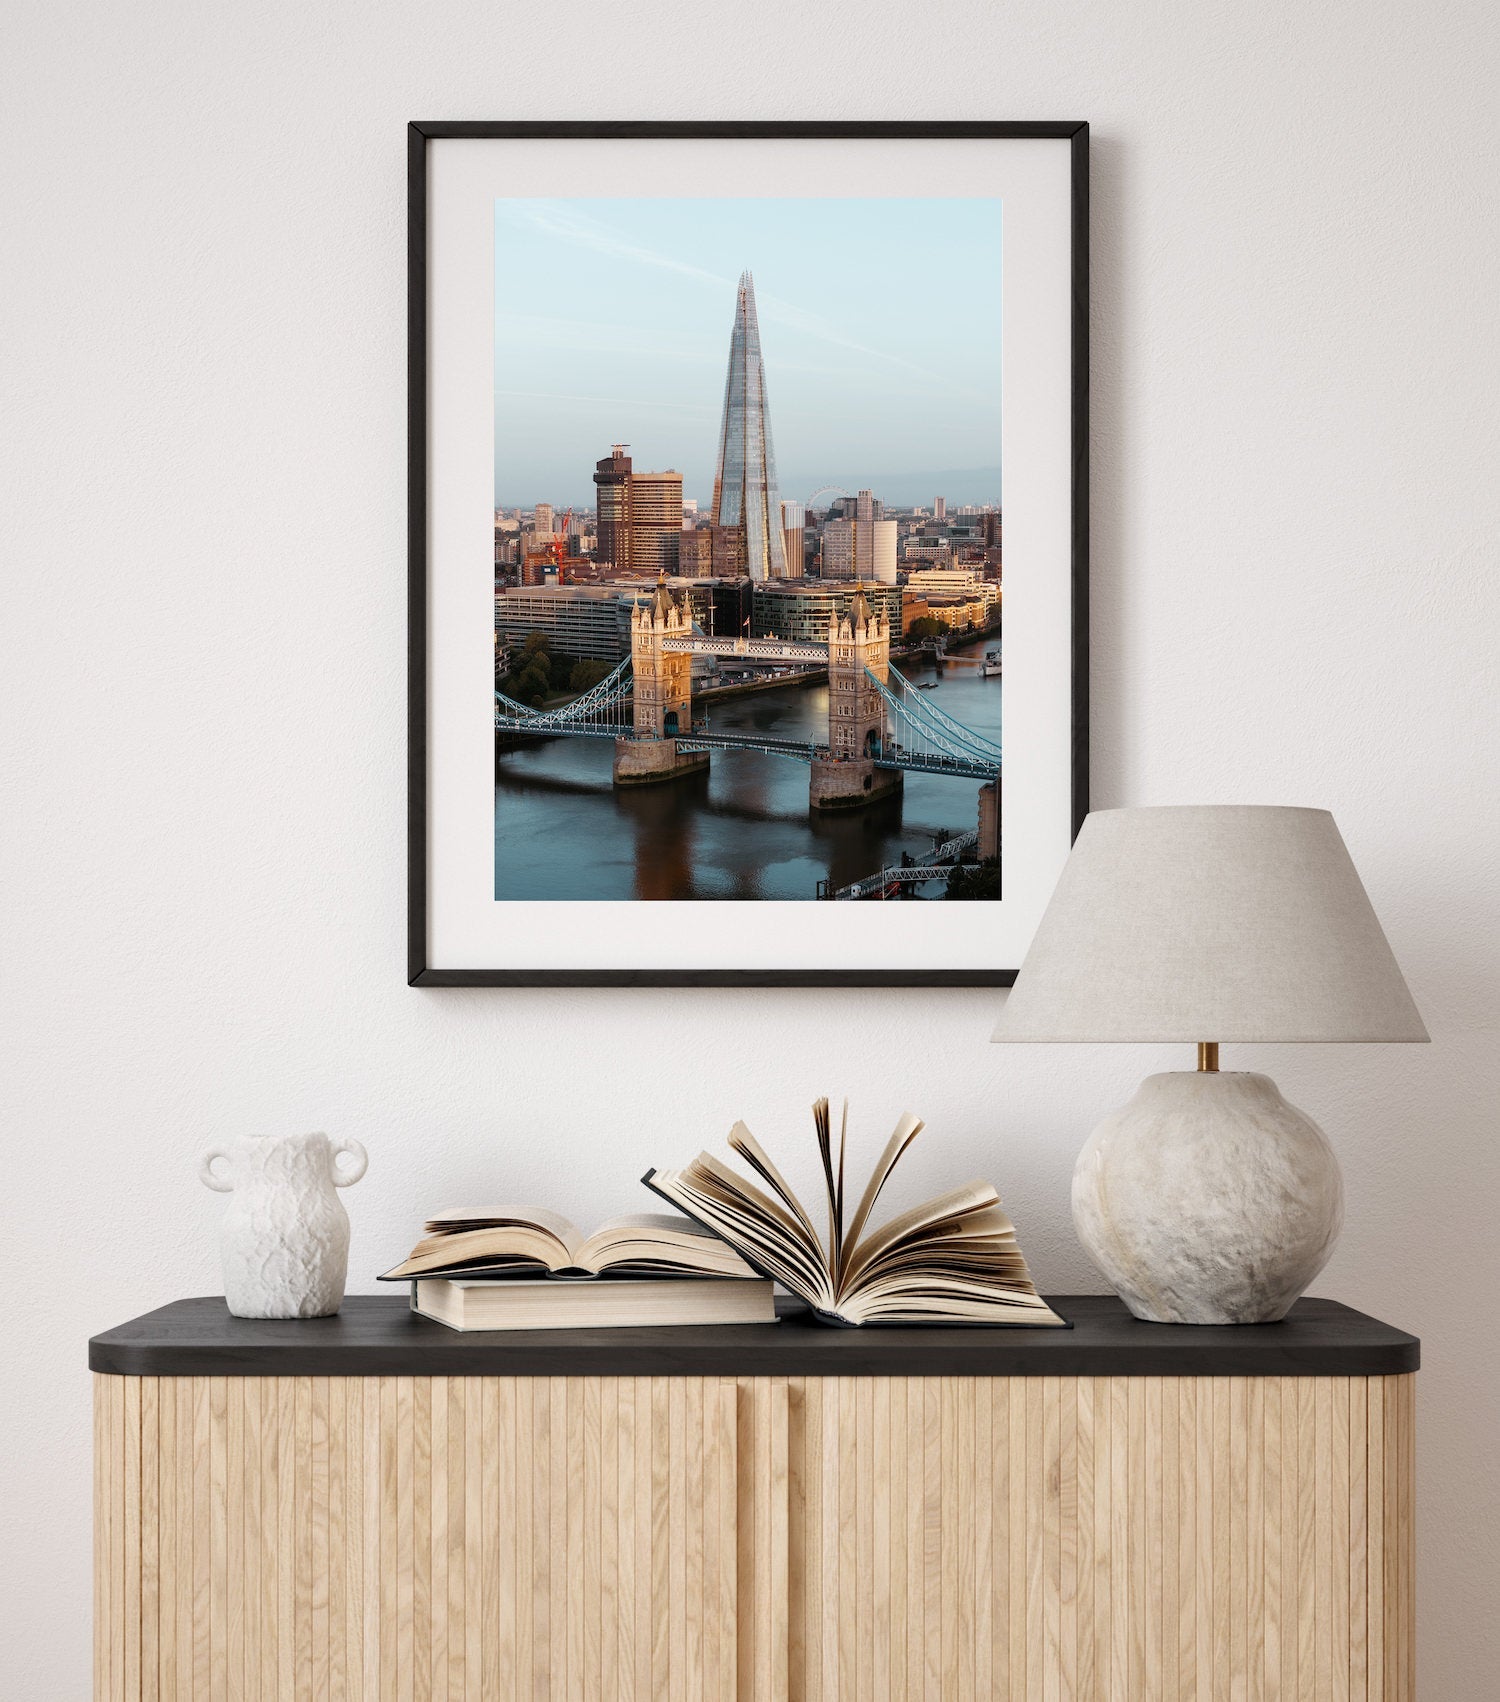 London Tower Bridge II - Peter Yan Studio